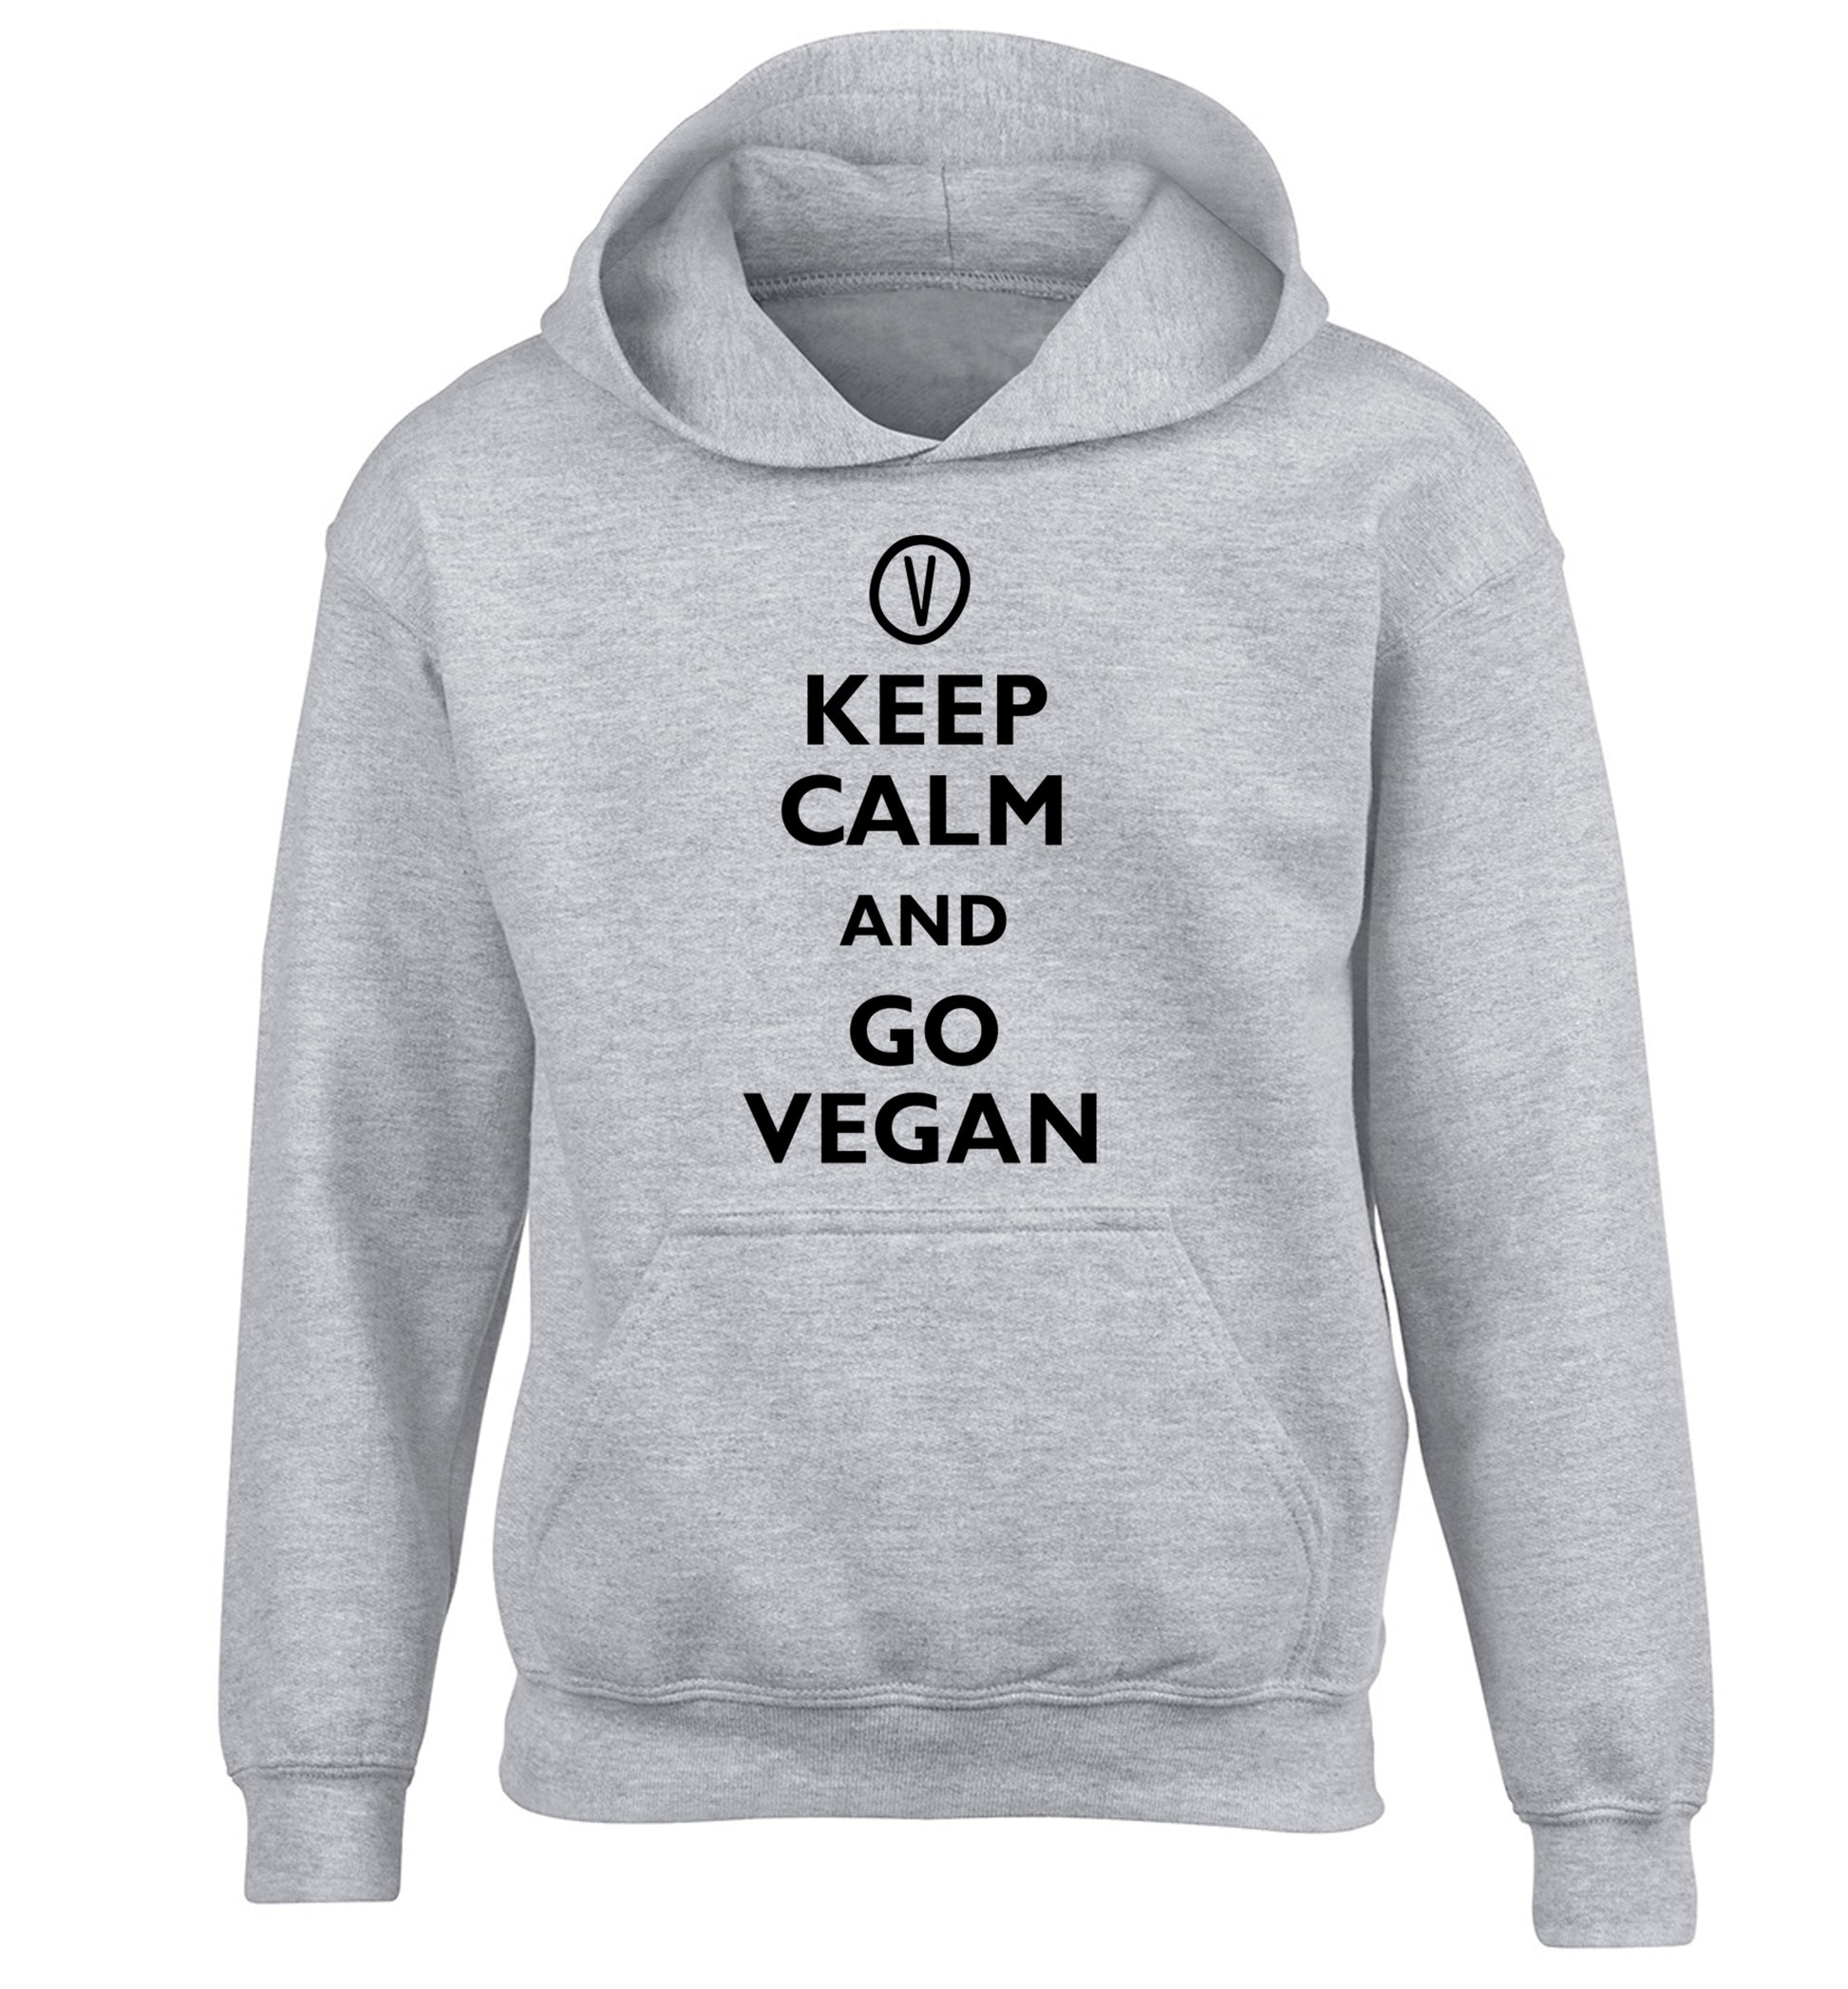 Keep calm and go vegan children's grey hoodie 12-13 Years